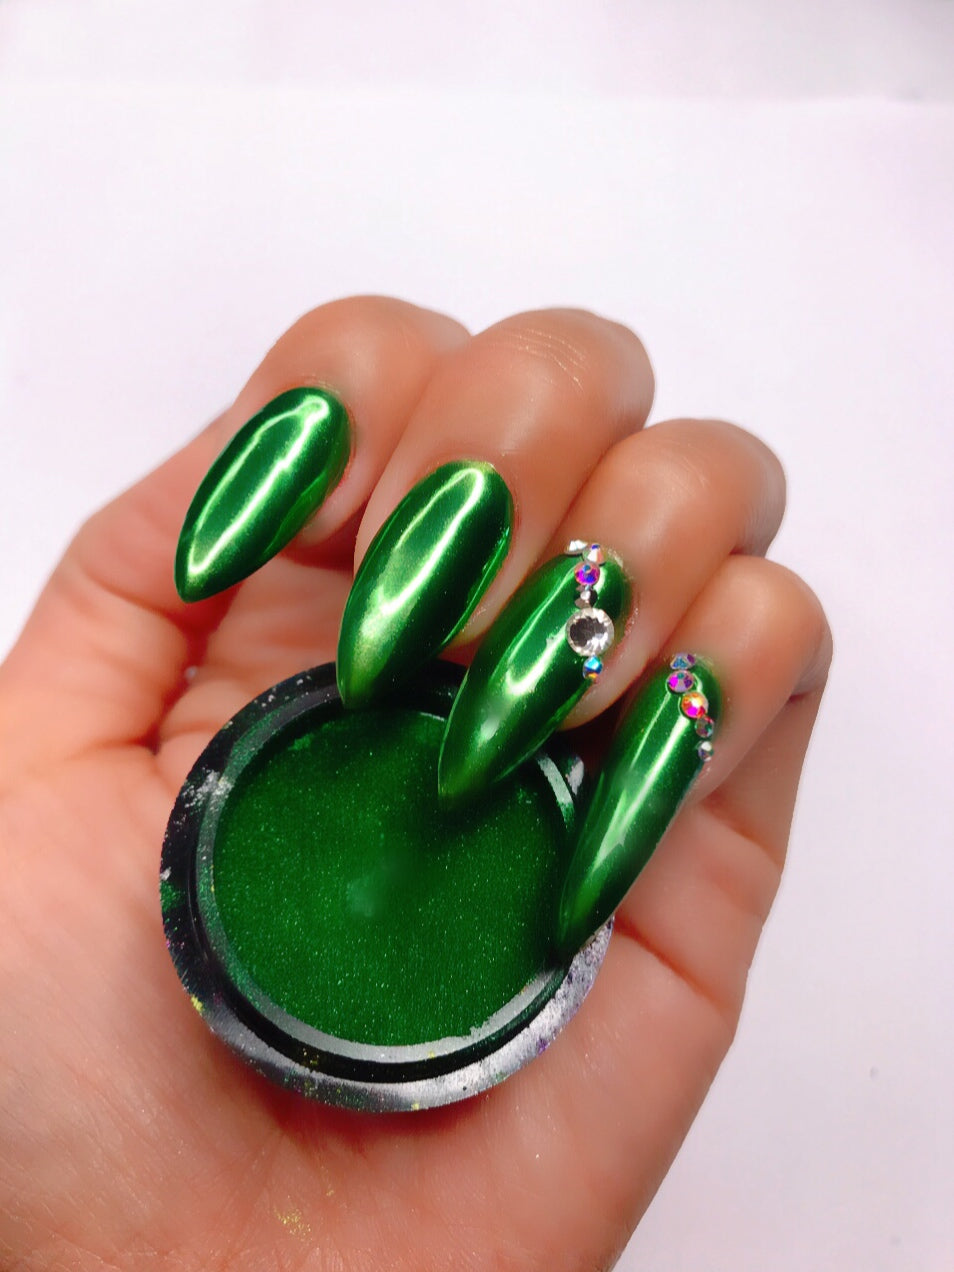 SHINE #03- Forest Green - 100% Pigment Chrome- Mirror Nail Powder